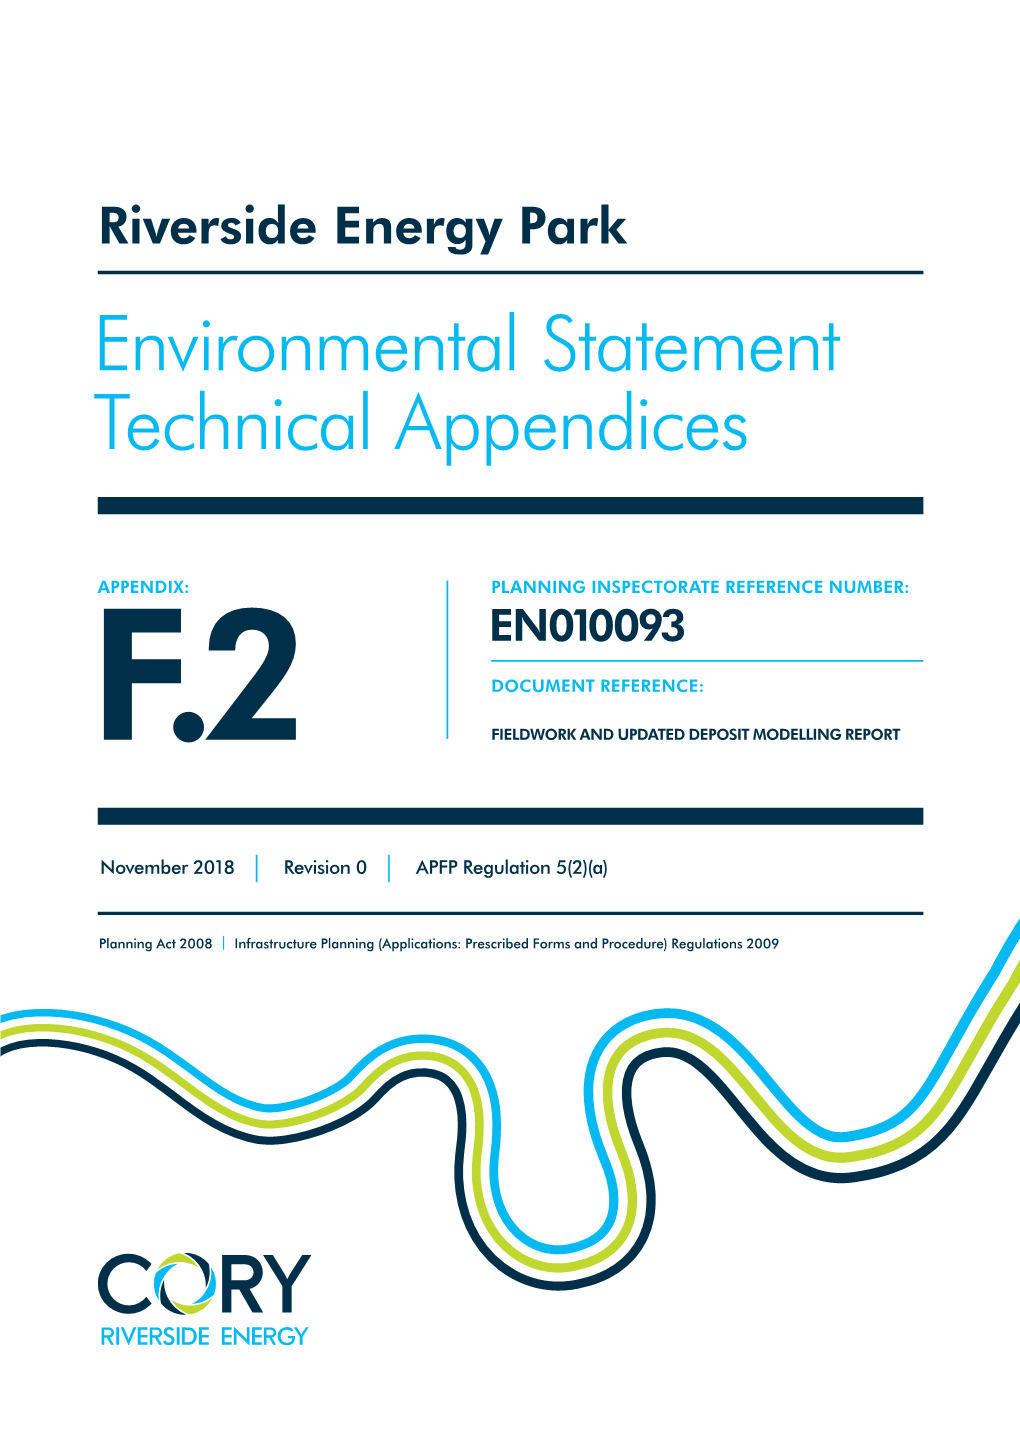 Riverside Energy Park Environmental Statement Technical Appendices